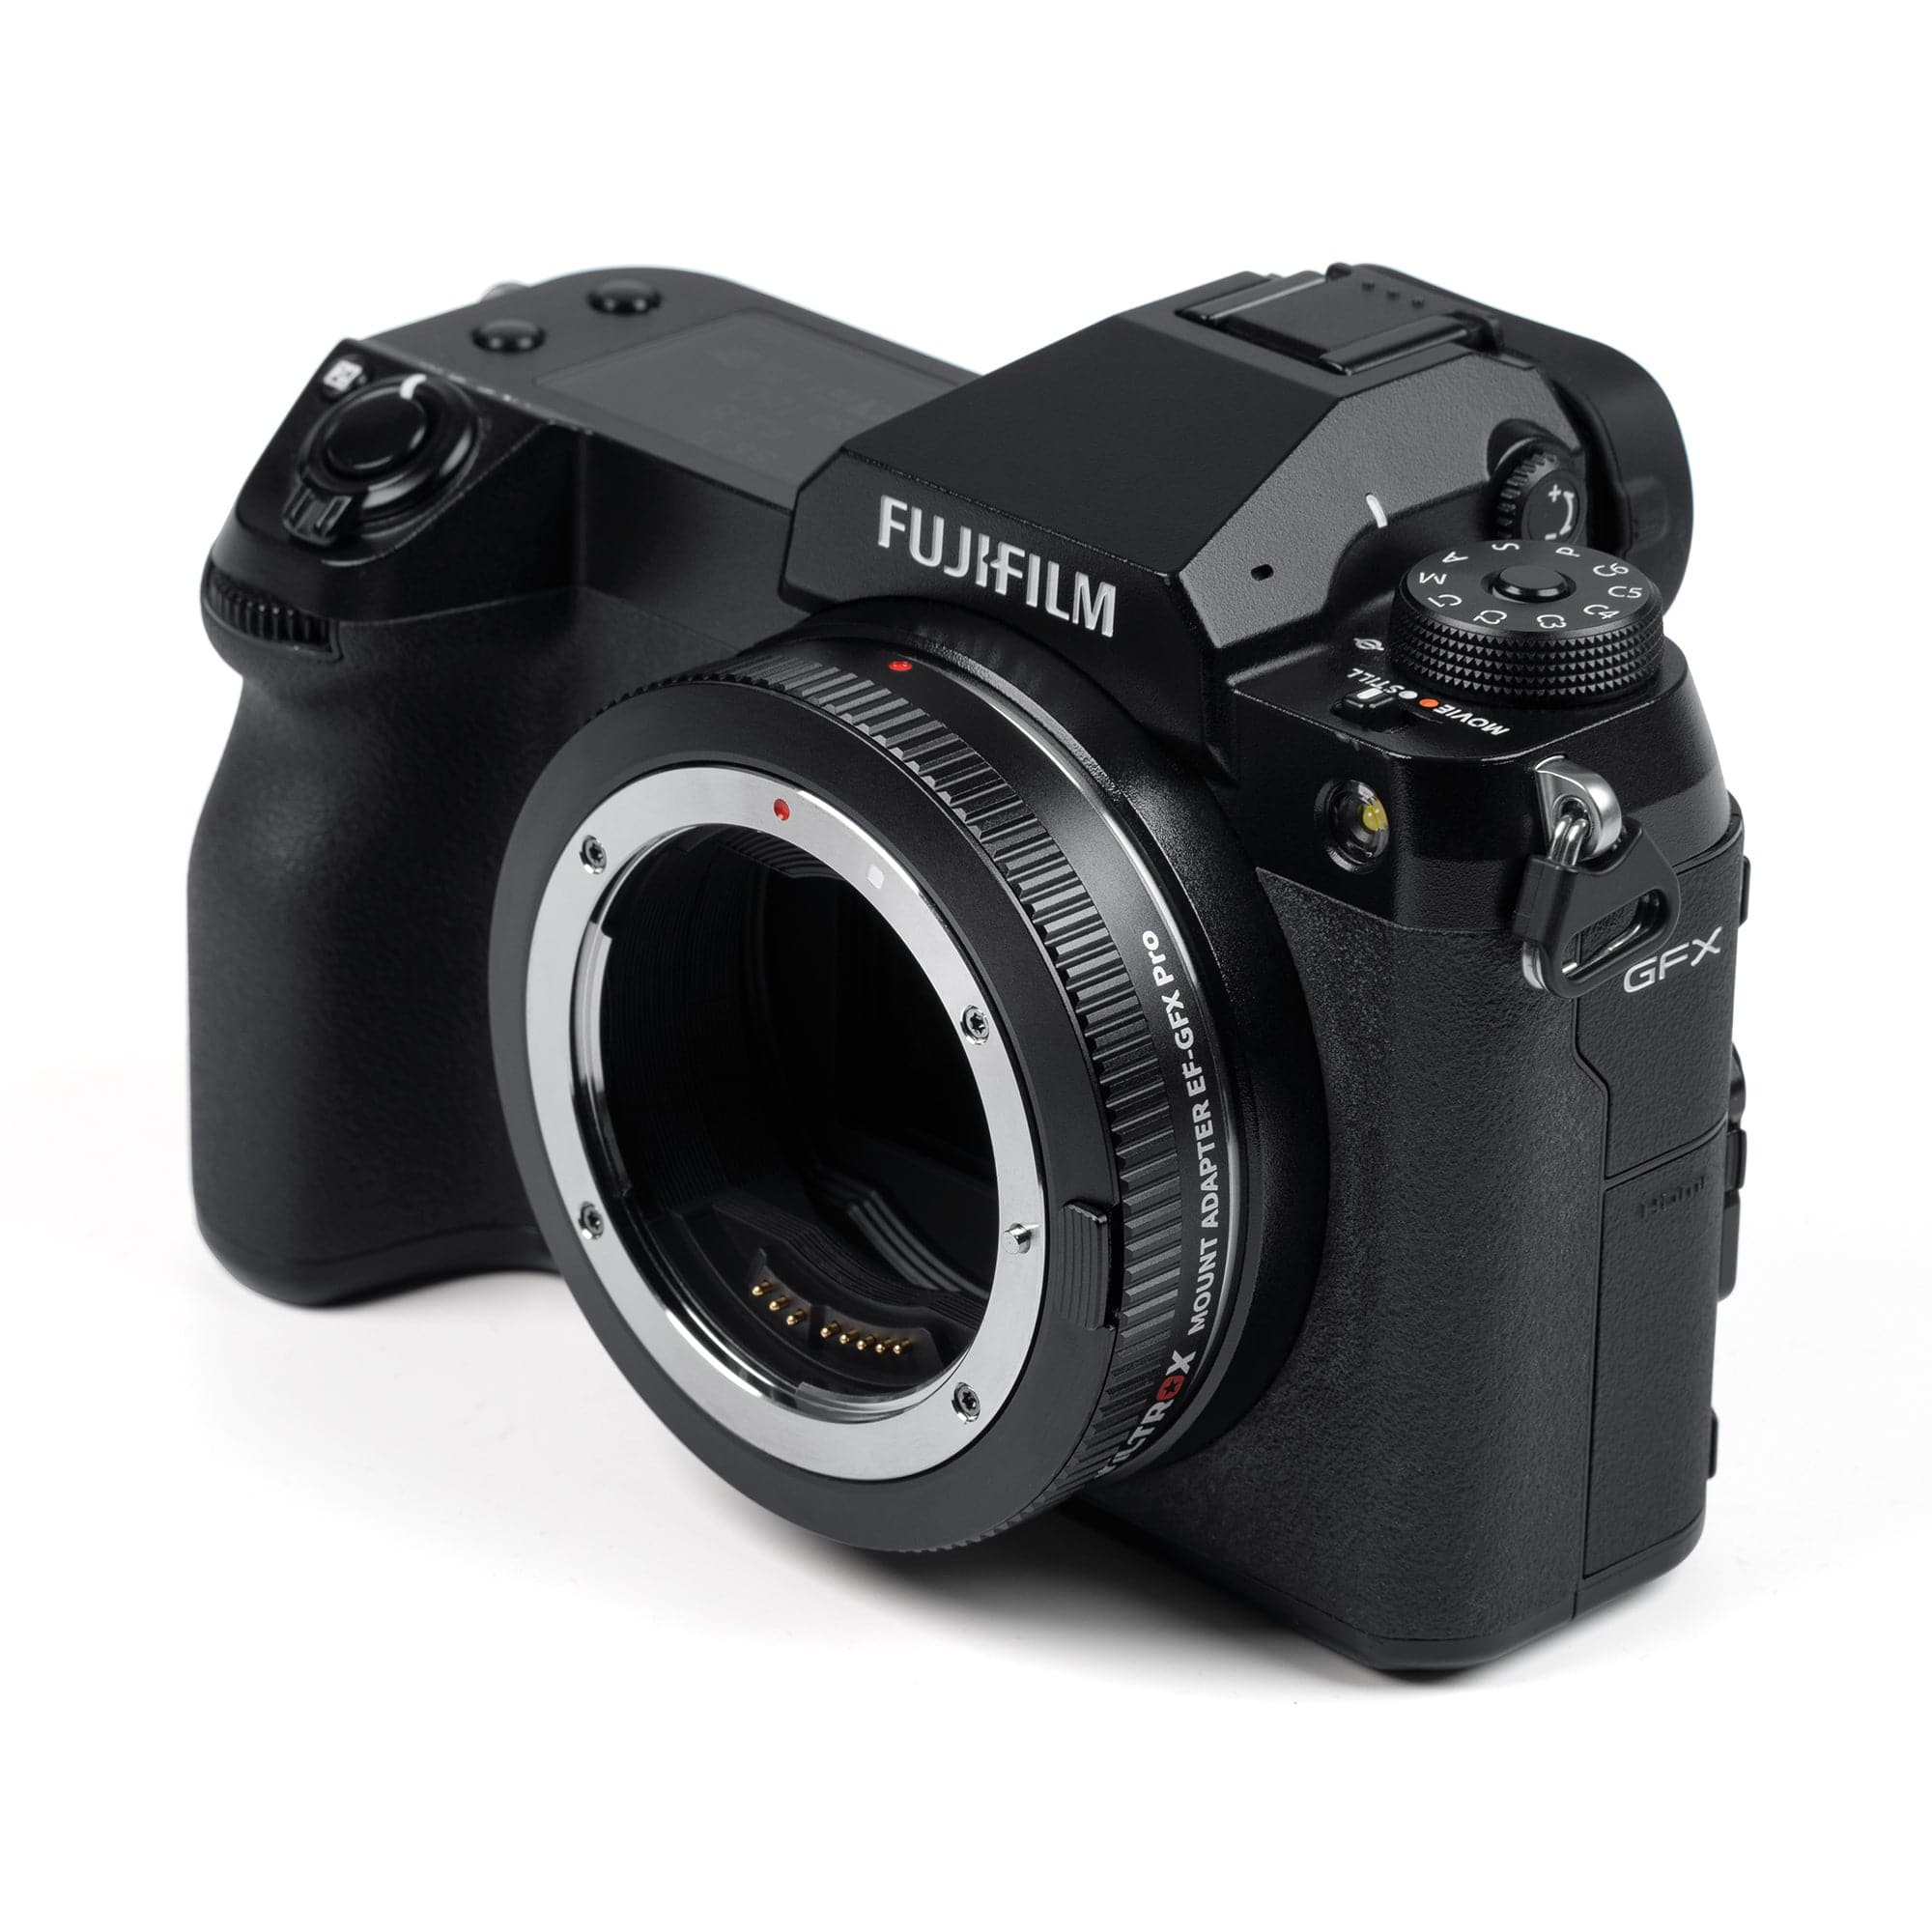 Viltrox EF-GFX/GFX Pro adapter for Canon EF/EF-S series lens to  Fuji GFX-mount